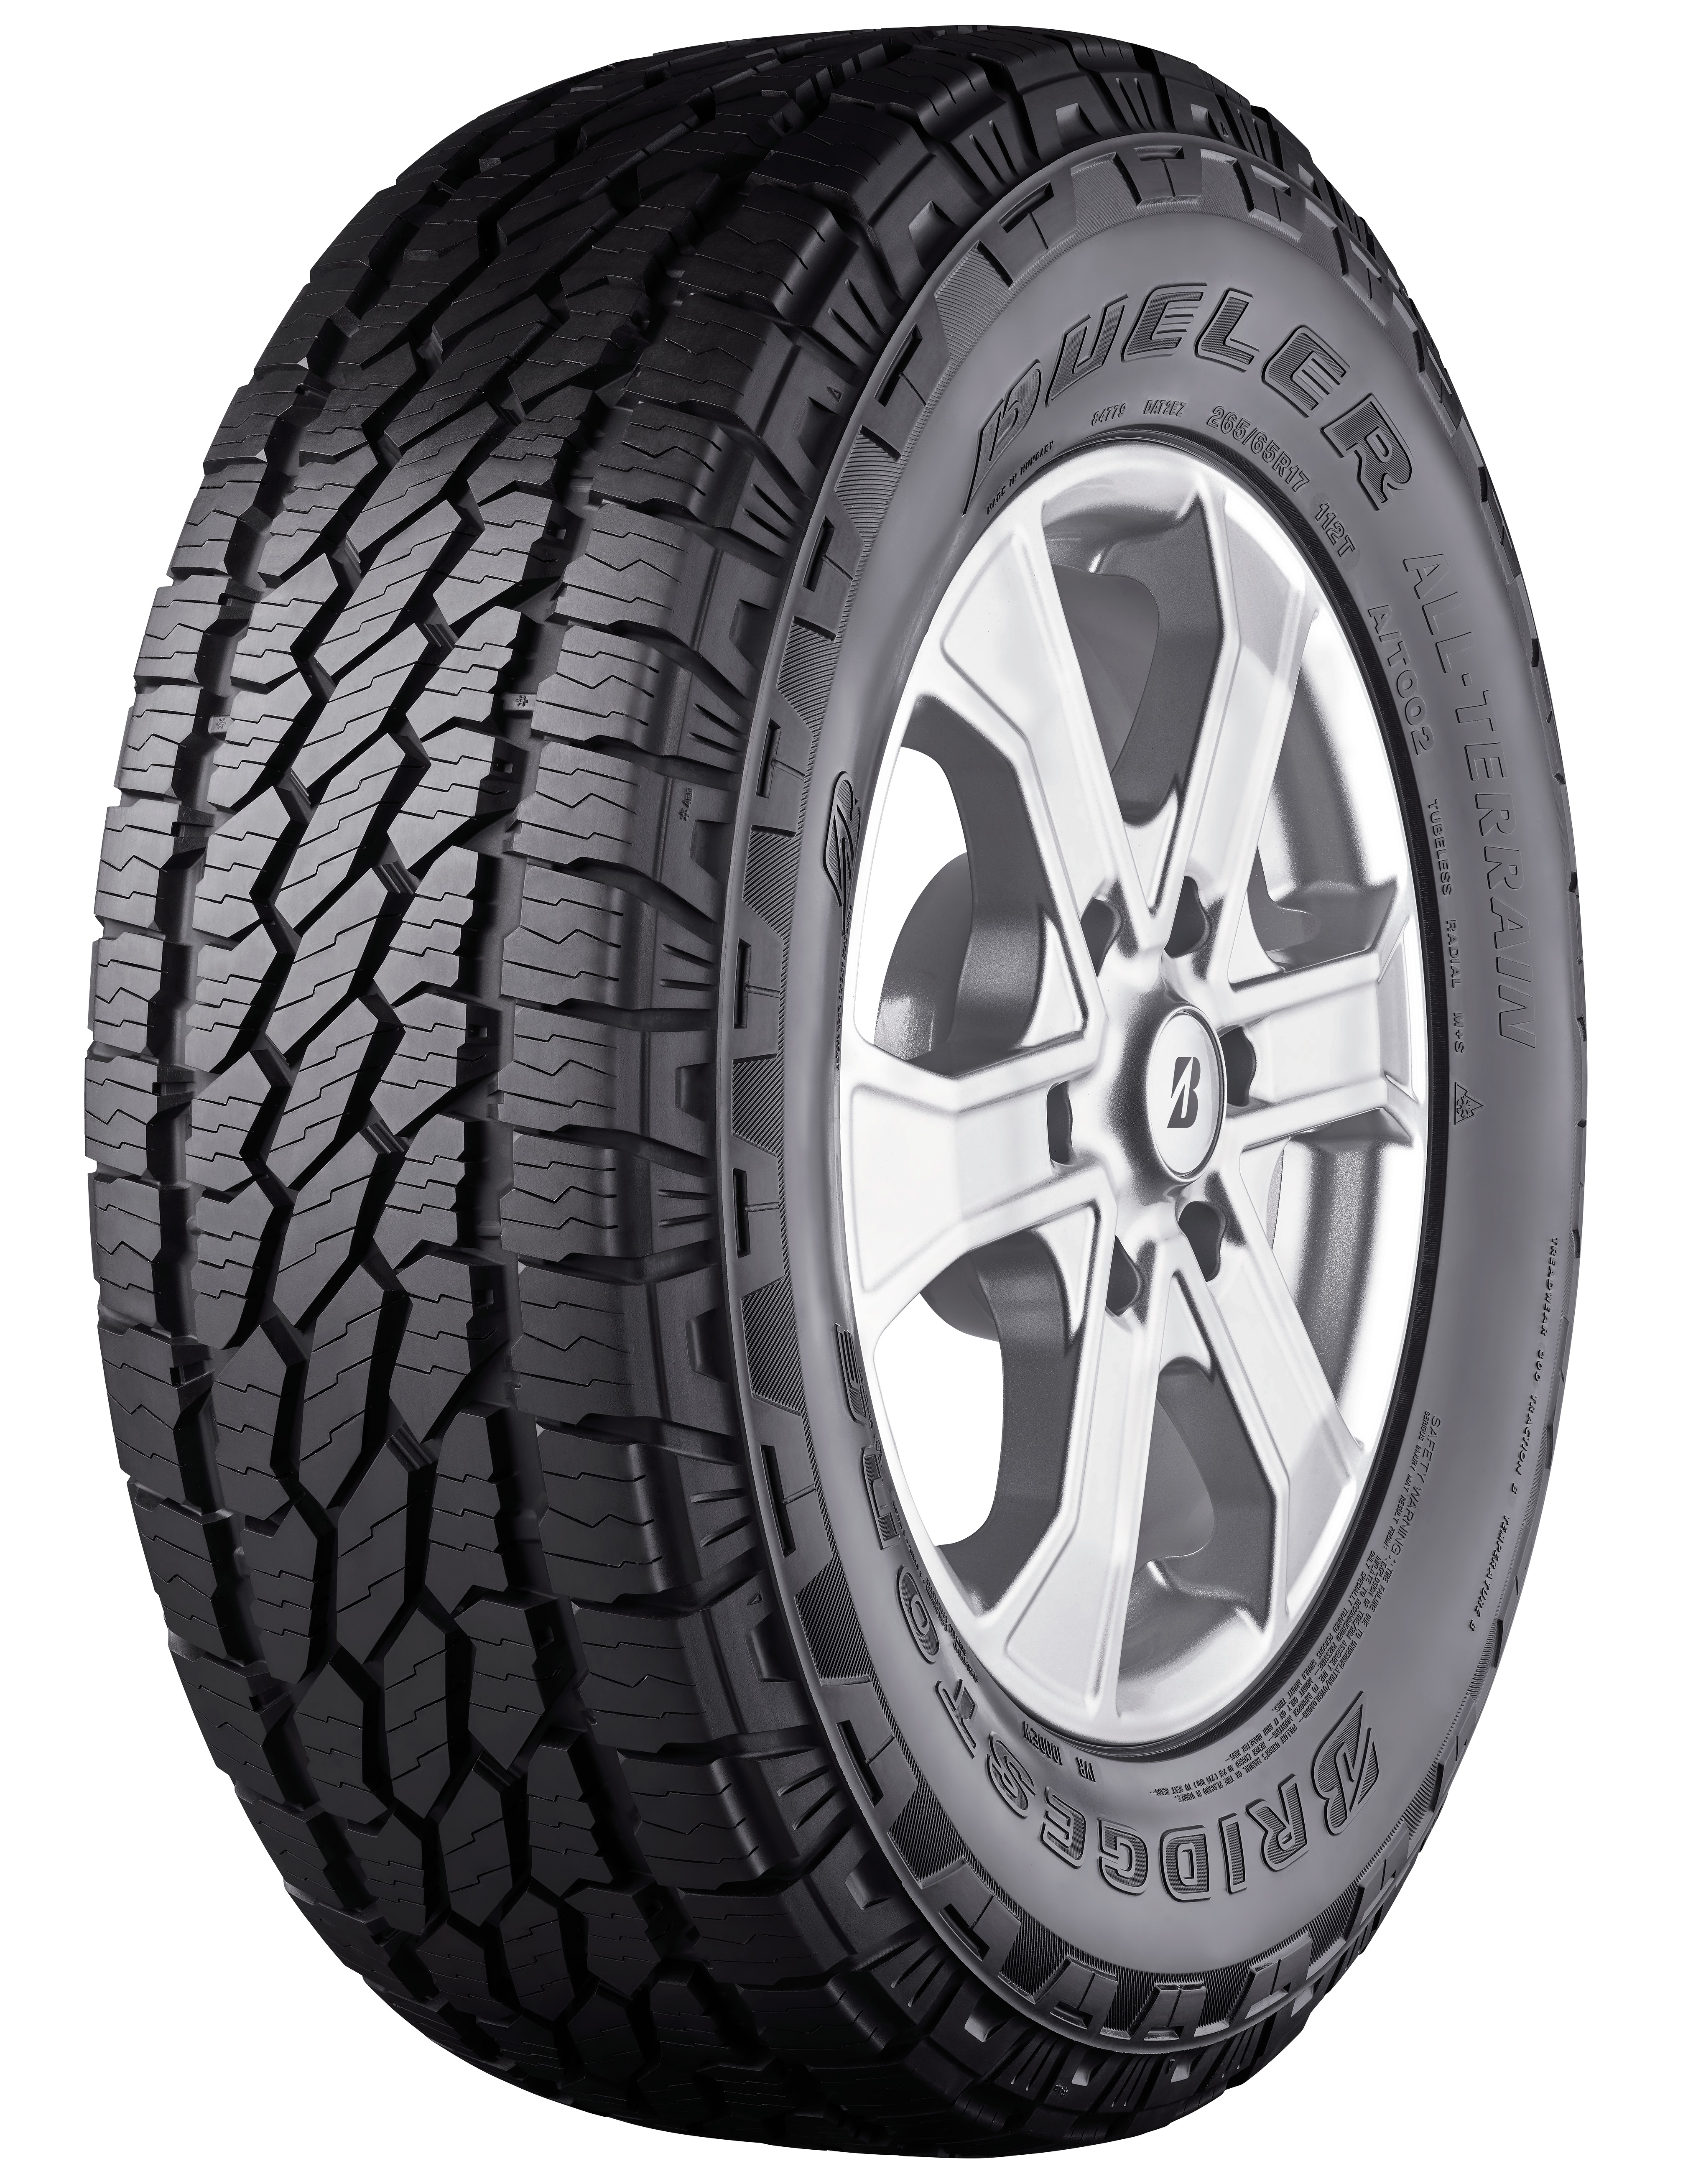 Bridgestone Dueler All Reviews Tyre AT002 and Tests - Terrain